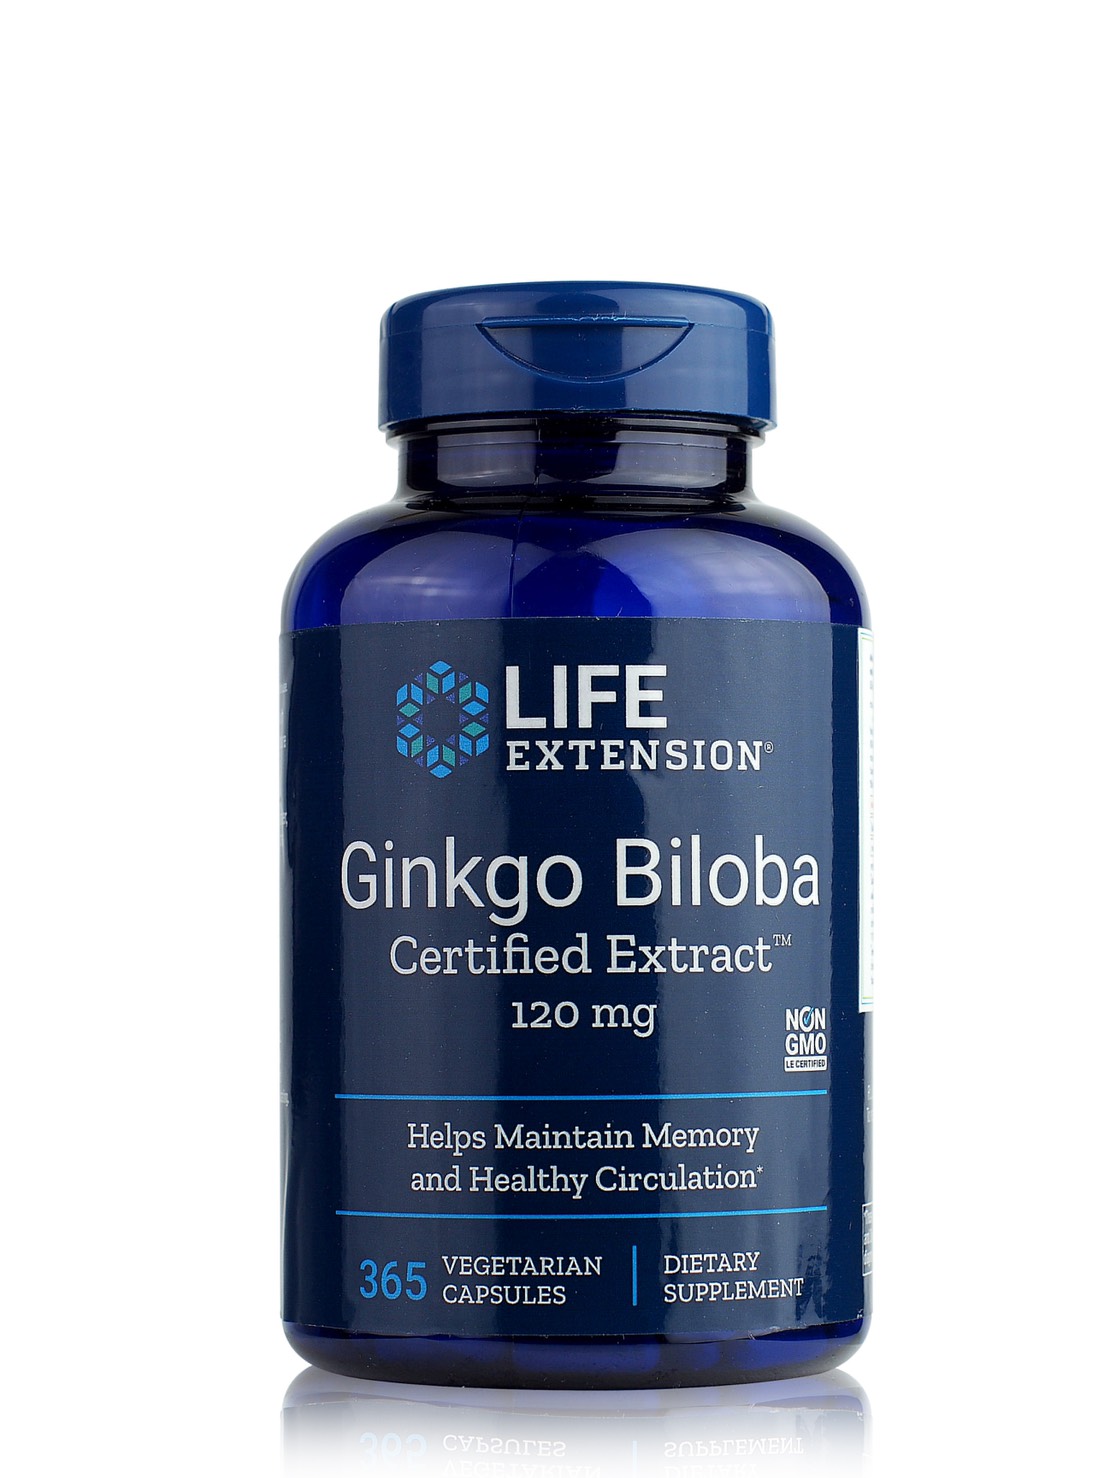 [EXP 04/2022] Life Extension Ginkgo Biloba Certified Extract 120mg (365เม็ด) อาหารเสริม วิตามิน เพิ่มสมาธิ เพิ่มความจำ